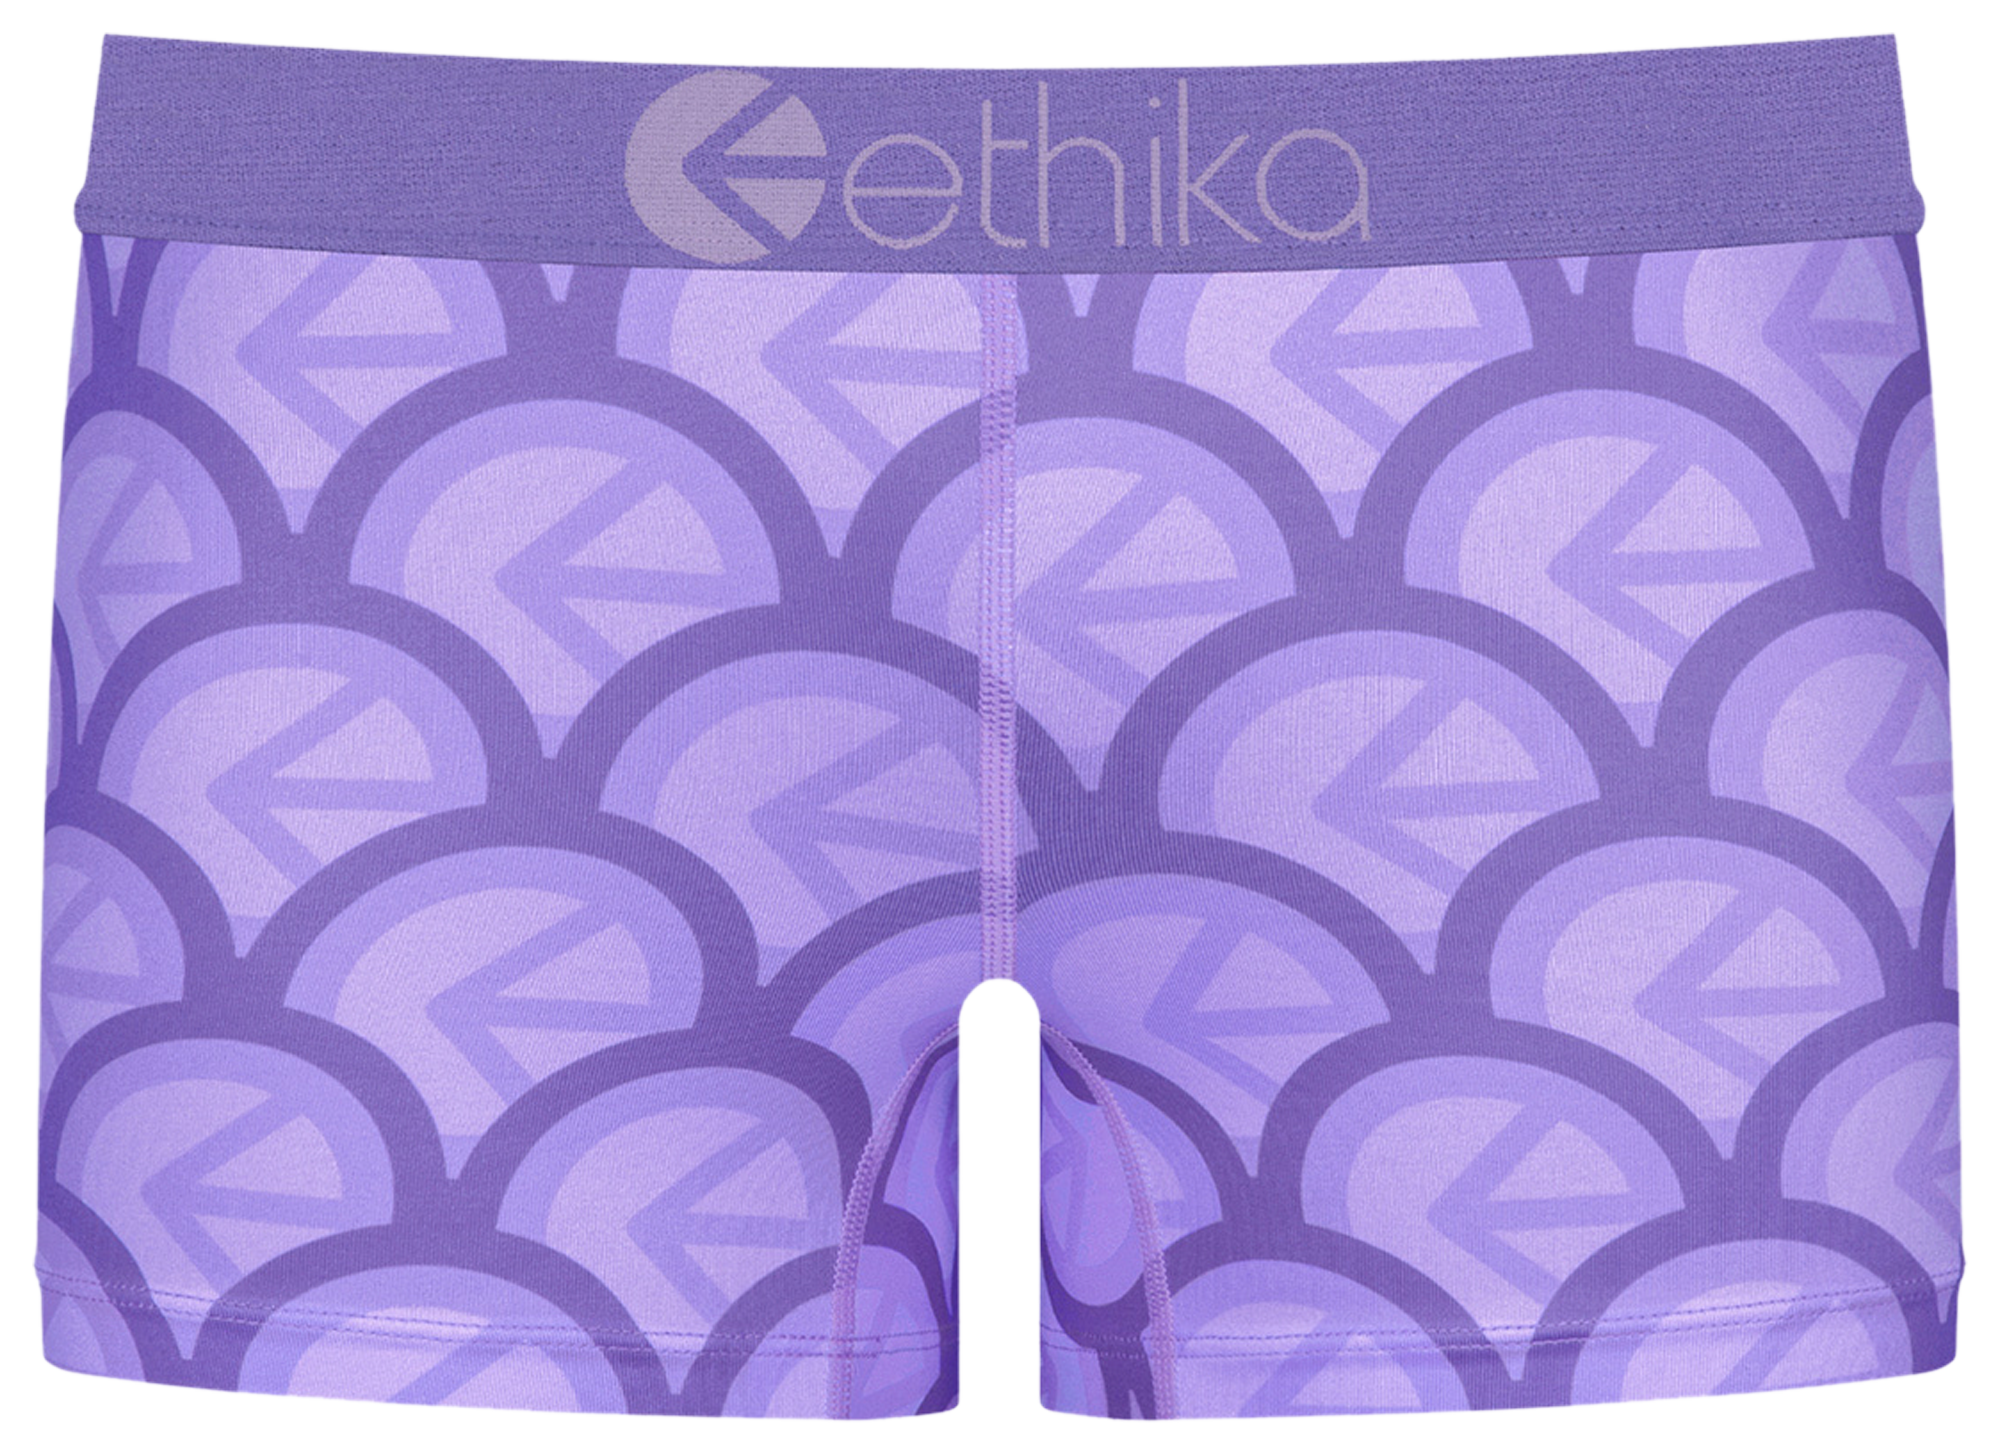 Ethika Queen Tide Camo Underwear - Girls' Grade School